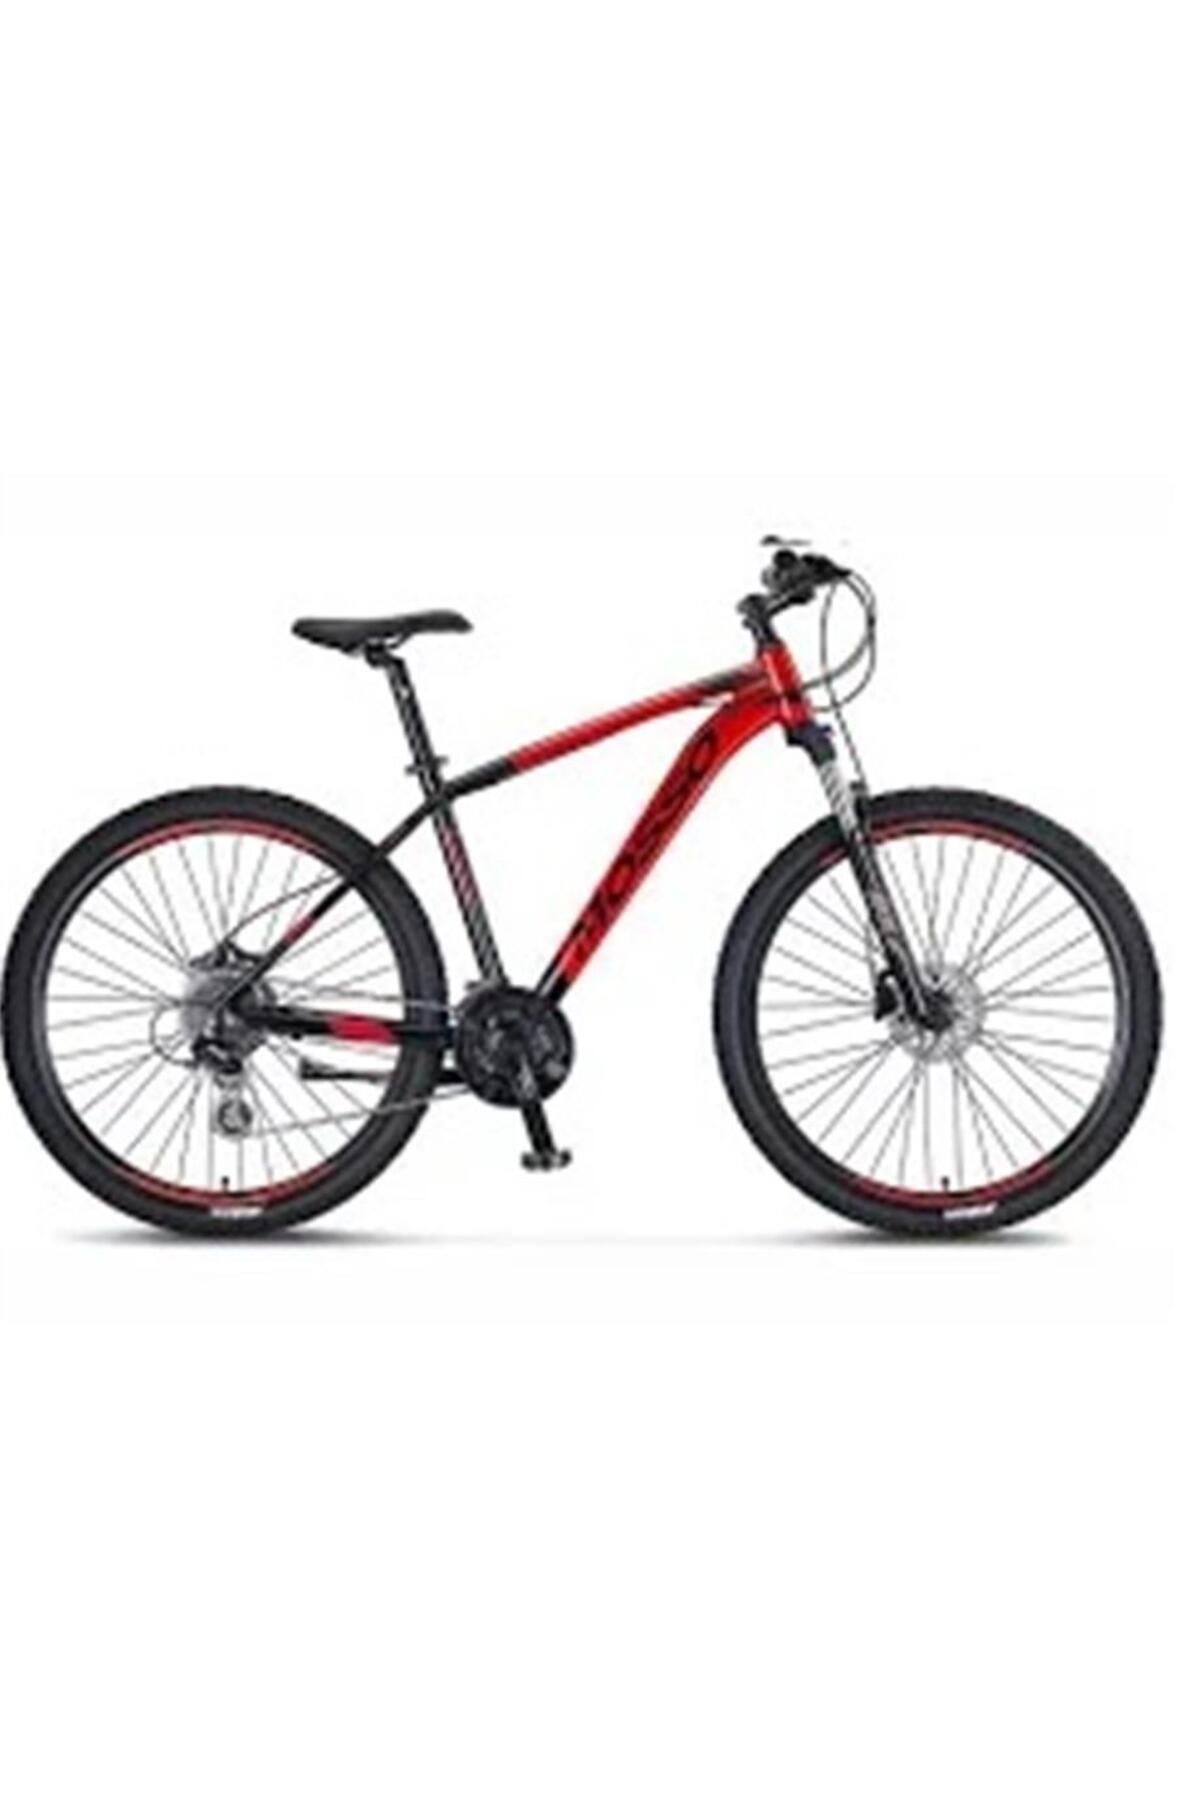 Mosso Racelıne-29-h Erkek Dağ Bisikleti 510h Hd 29 Jant 24 Vites Kırmızı Siyah